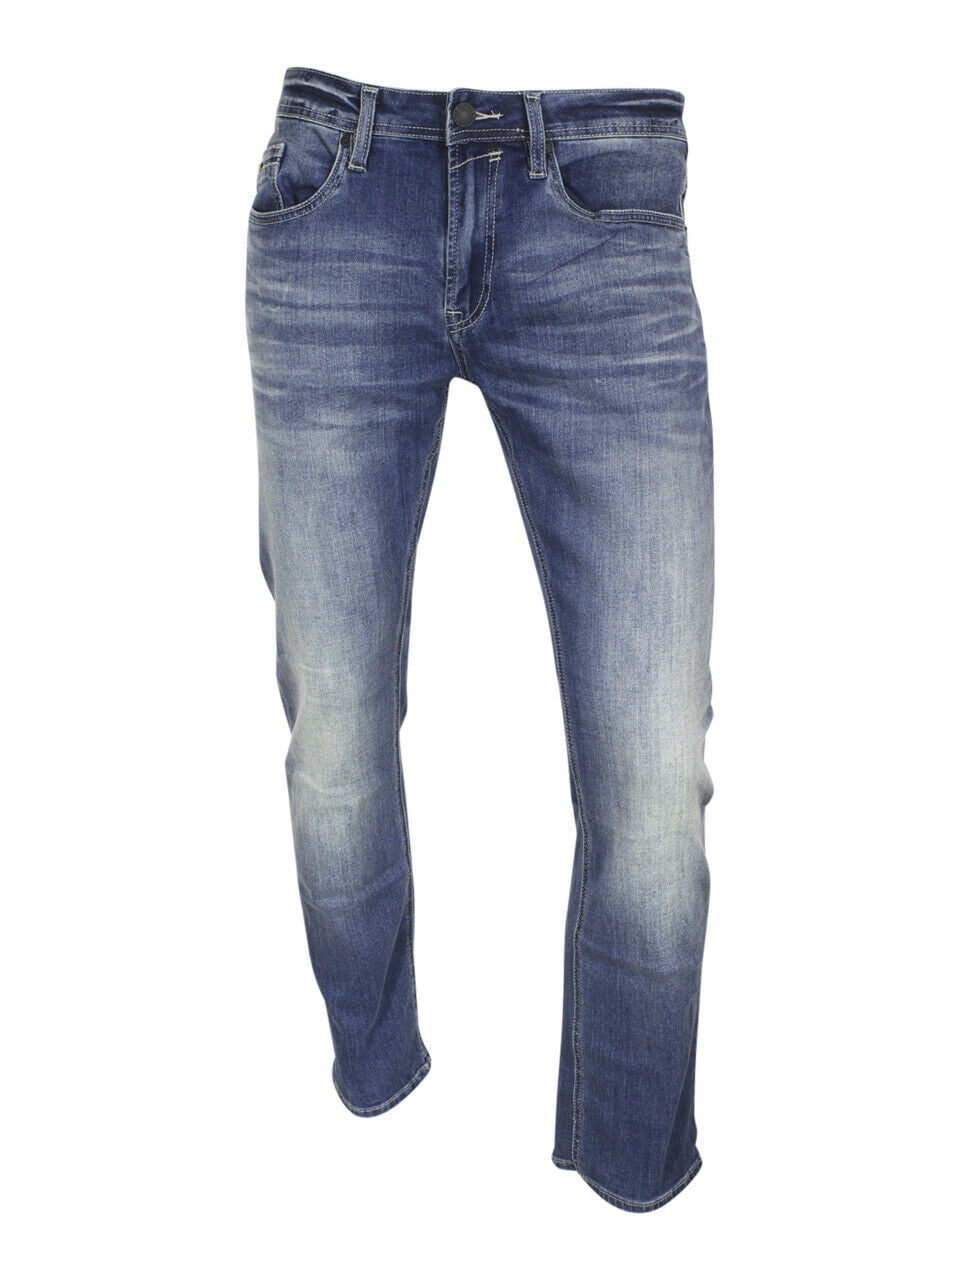 Buffalo Jeans - Mens Jeans 40X30 Slim Fit Stretch 40 - Walmart.com ...